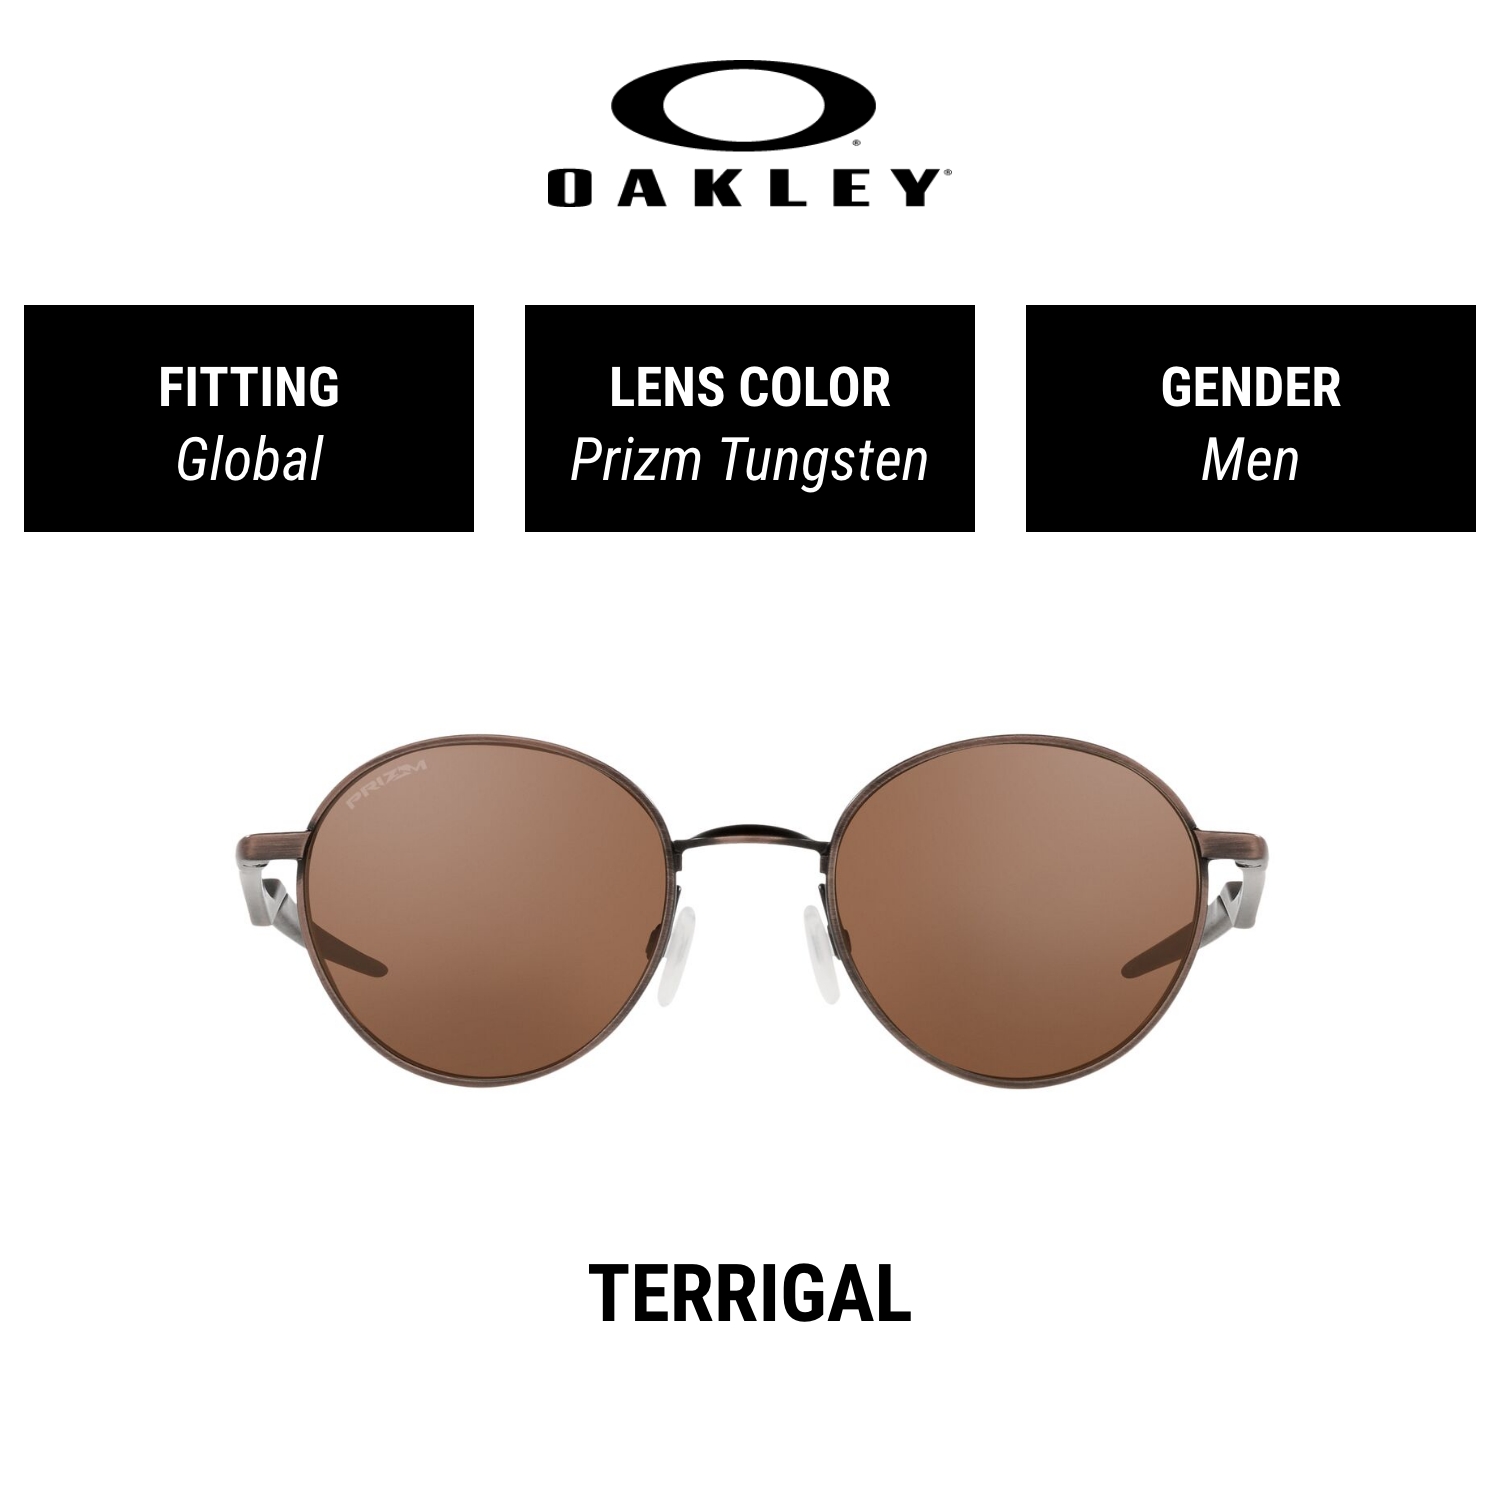 Oakley Sunglasses Terrigal OO4146 414602 Men Global Fitting Sunglasses Size  51mm | Lazada Singapore